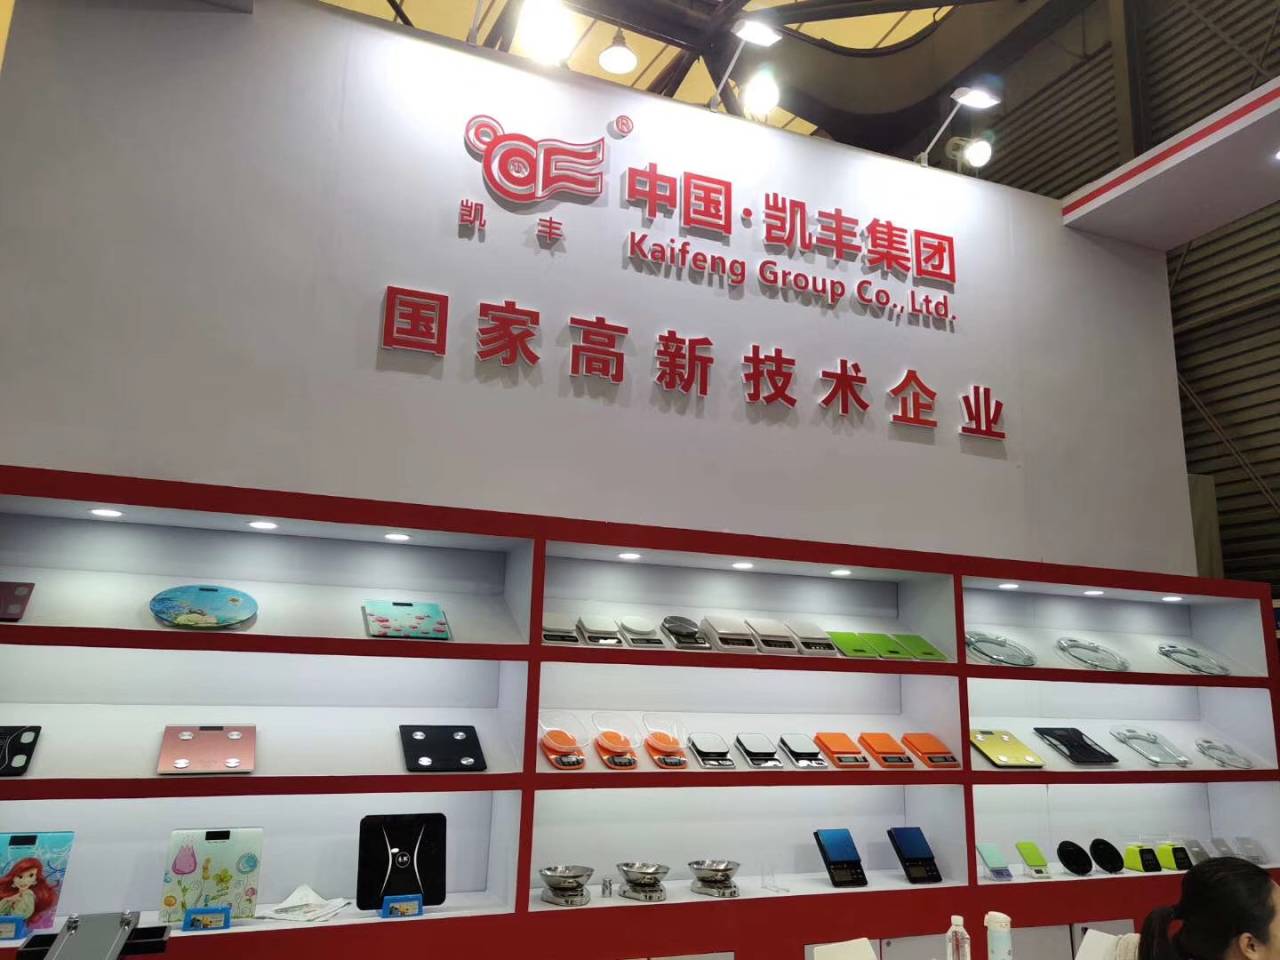 126th China Import and Export Fair (Canton Fair)